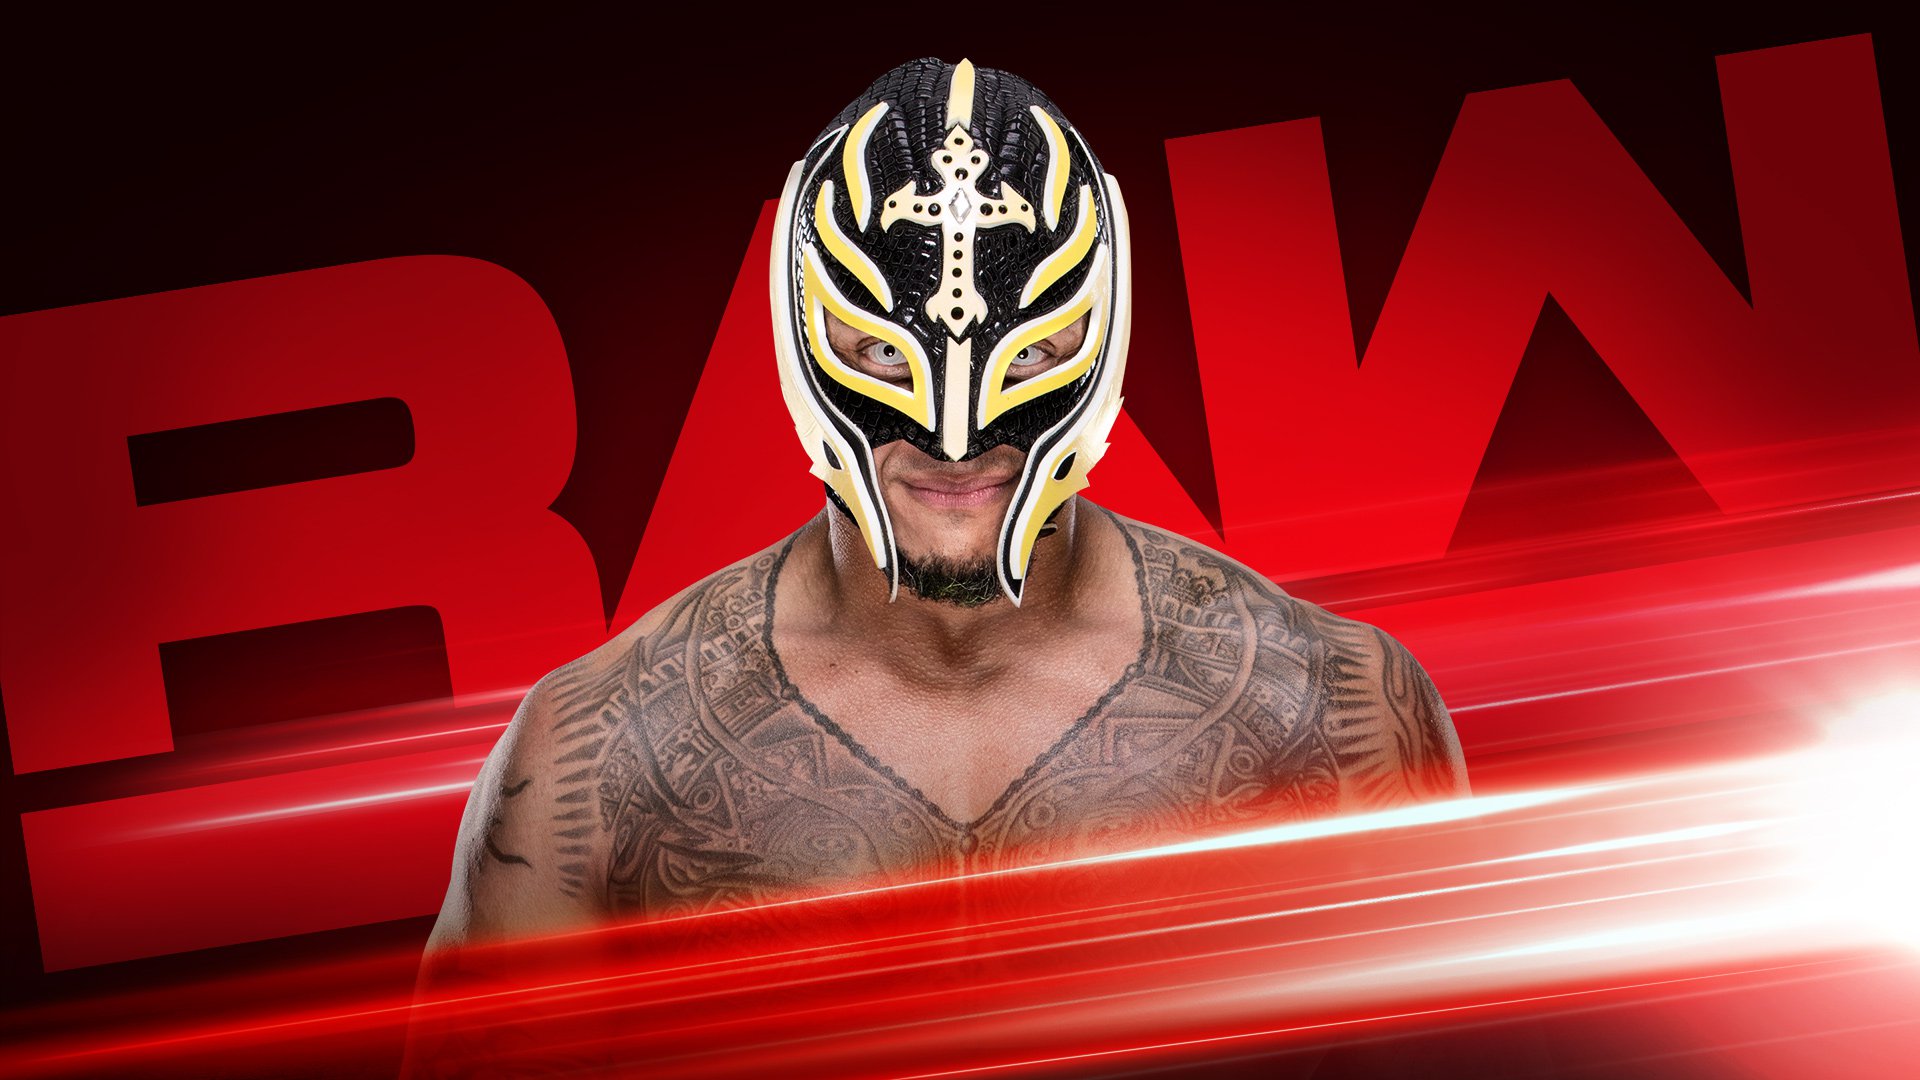 Rey Mysterio returns to Raw this Monday night